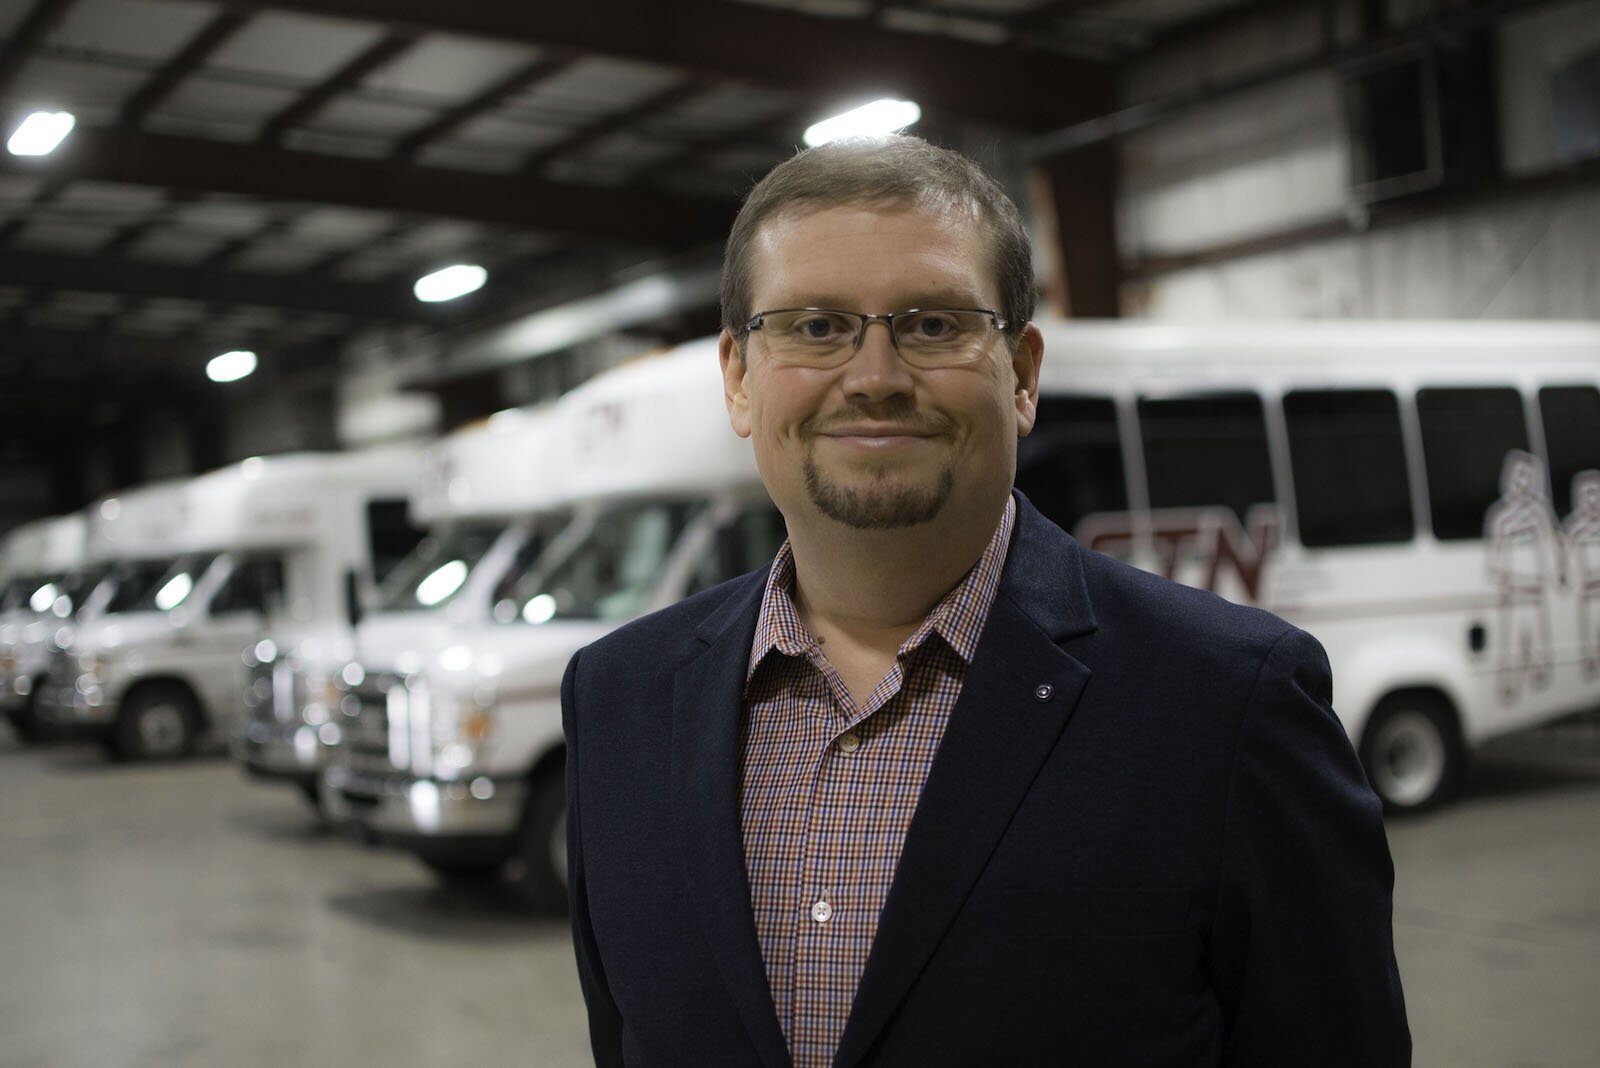 Portrait of Justin Clupper, Executive Director of Community Transport Network (CTN).